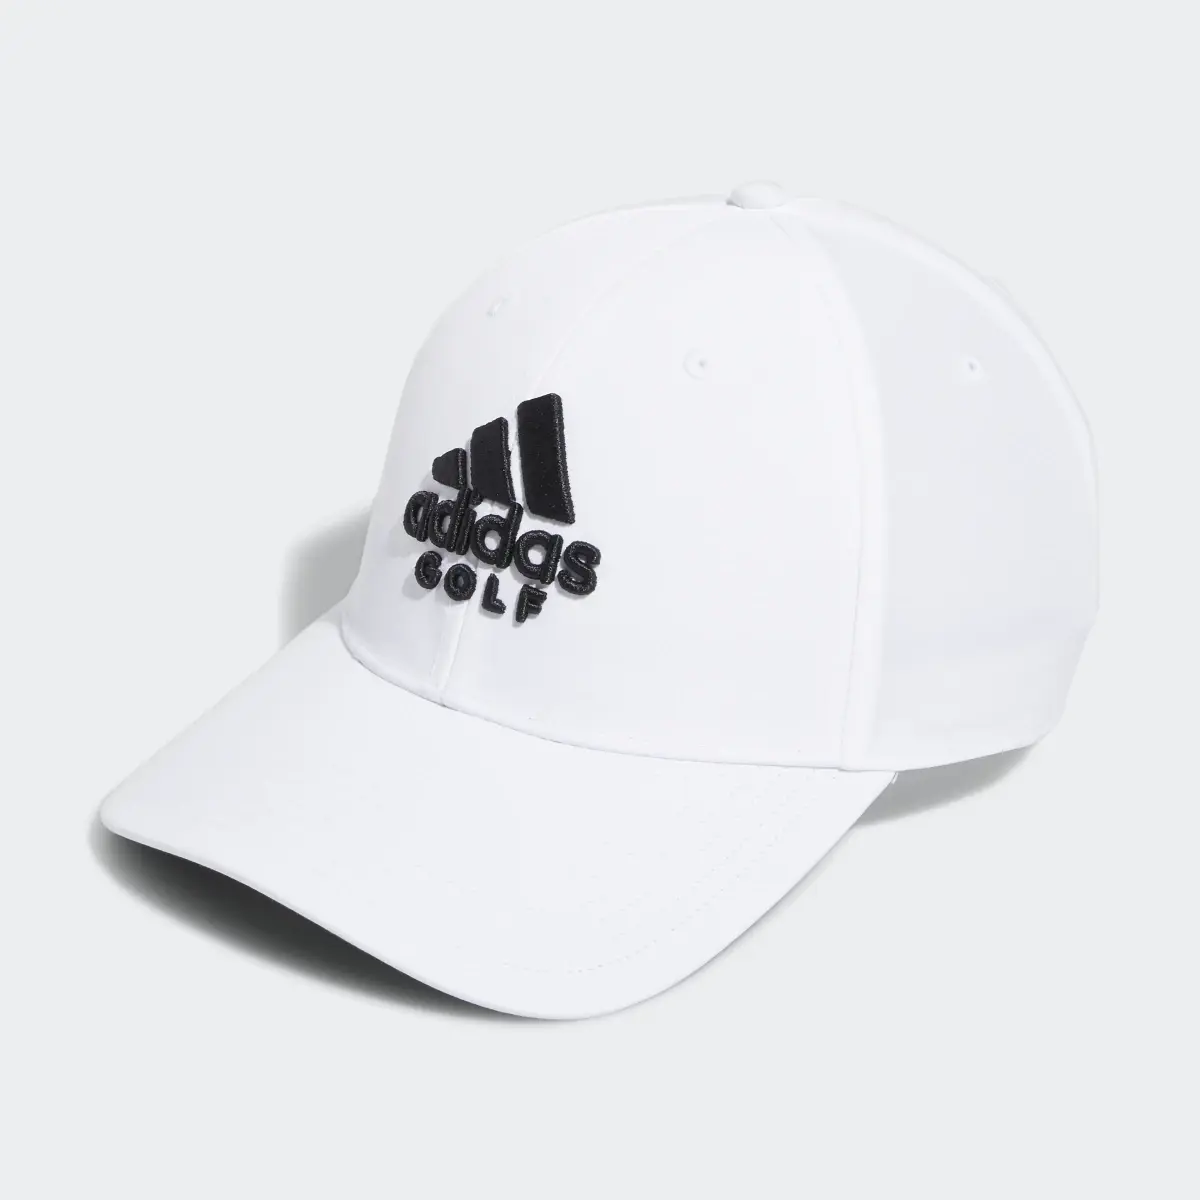 Adidas Cappellino da golf Performance. 2